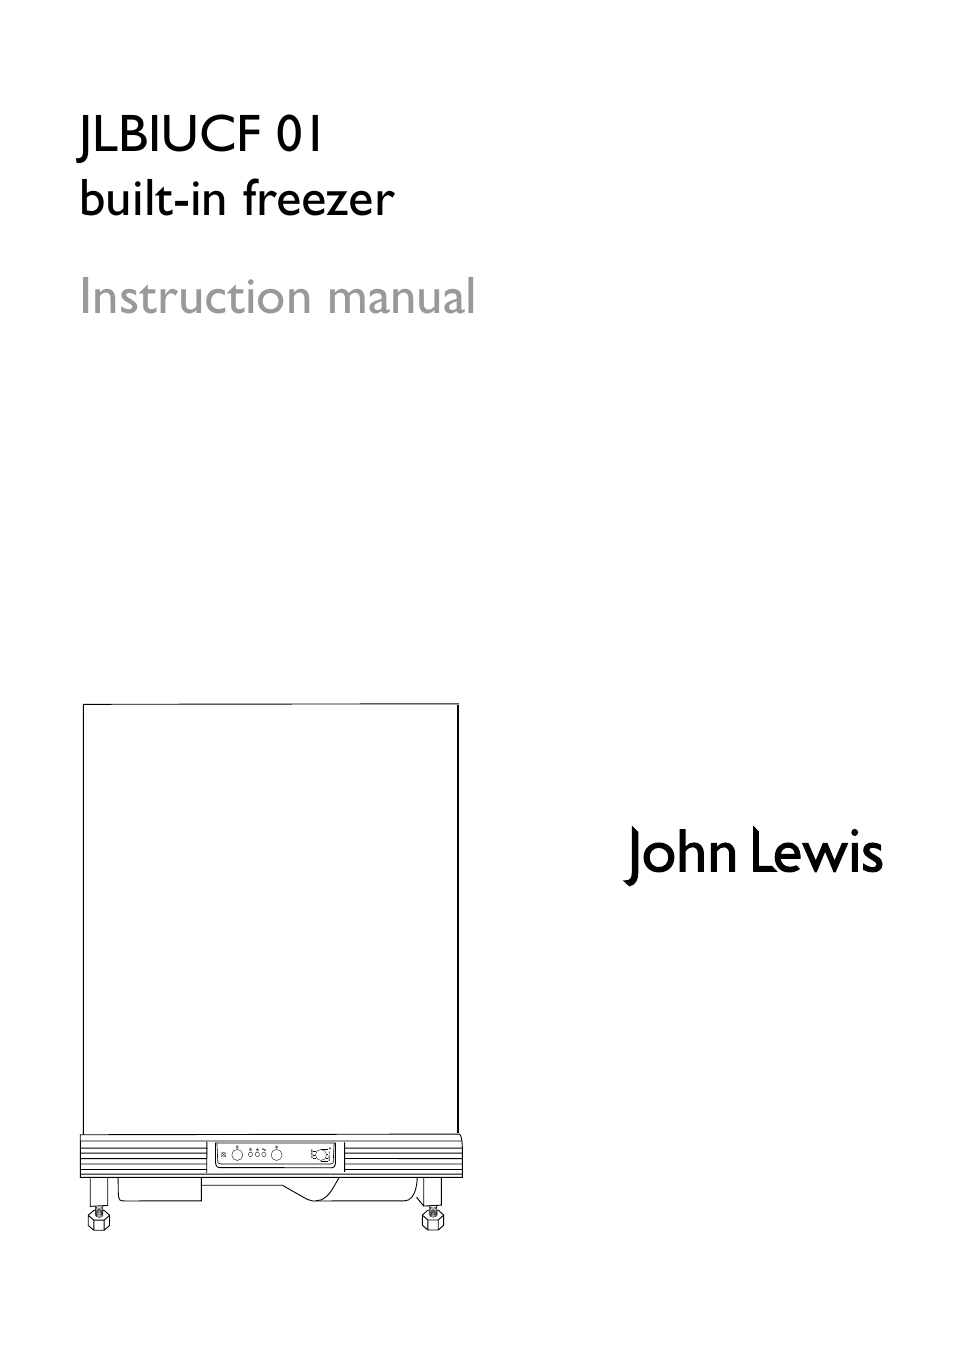 John Lewis JLBIUCF 01 User Manual | 20 pages